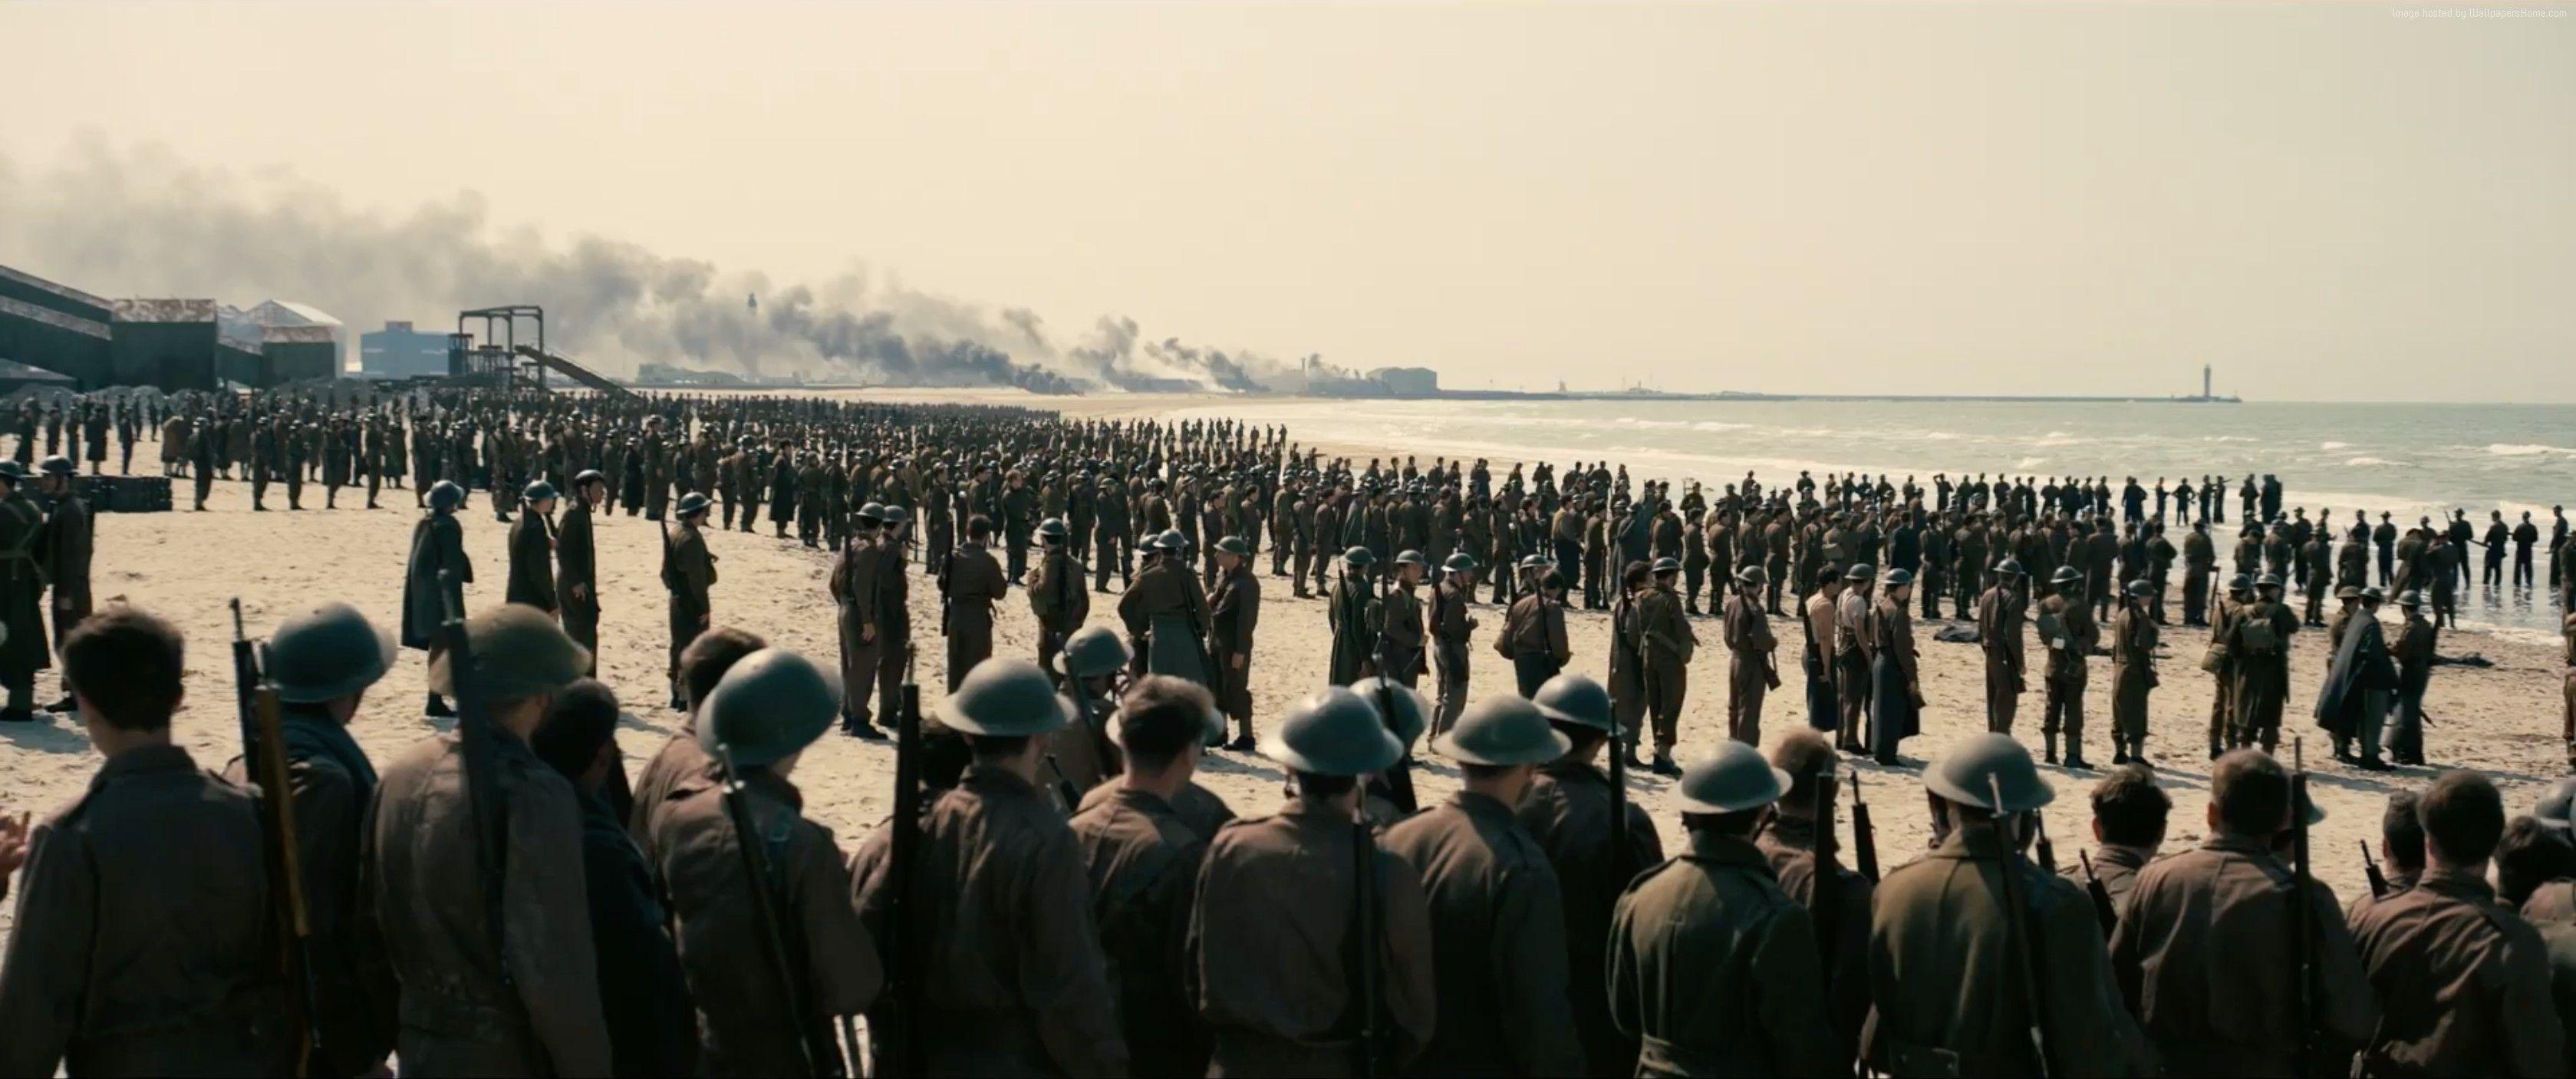 Dunkirk 2017 film Wallpaper (19 Wallpaper)